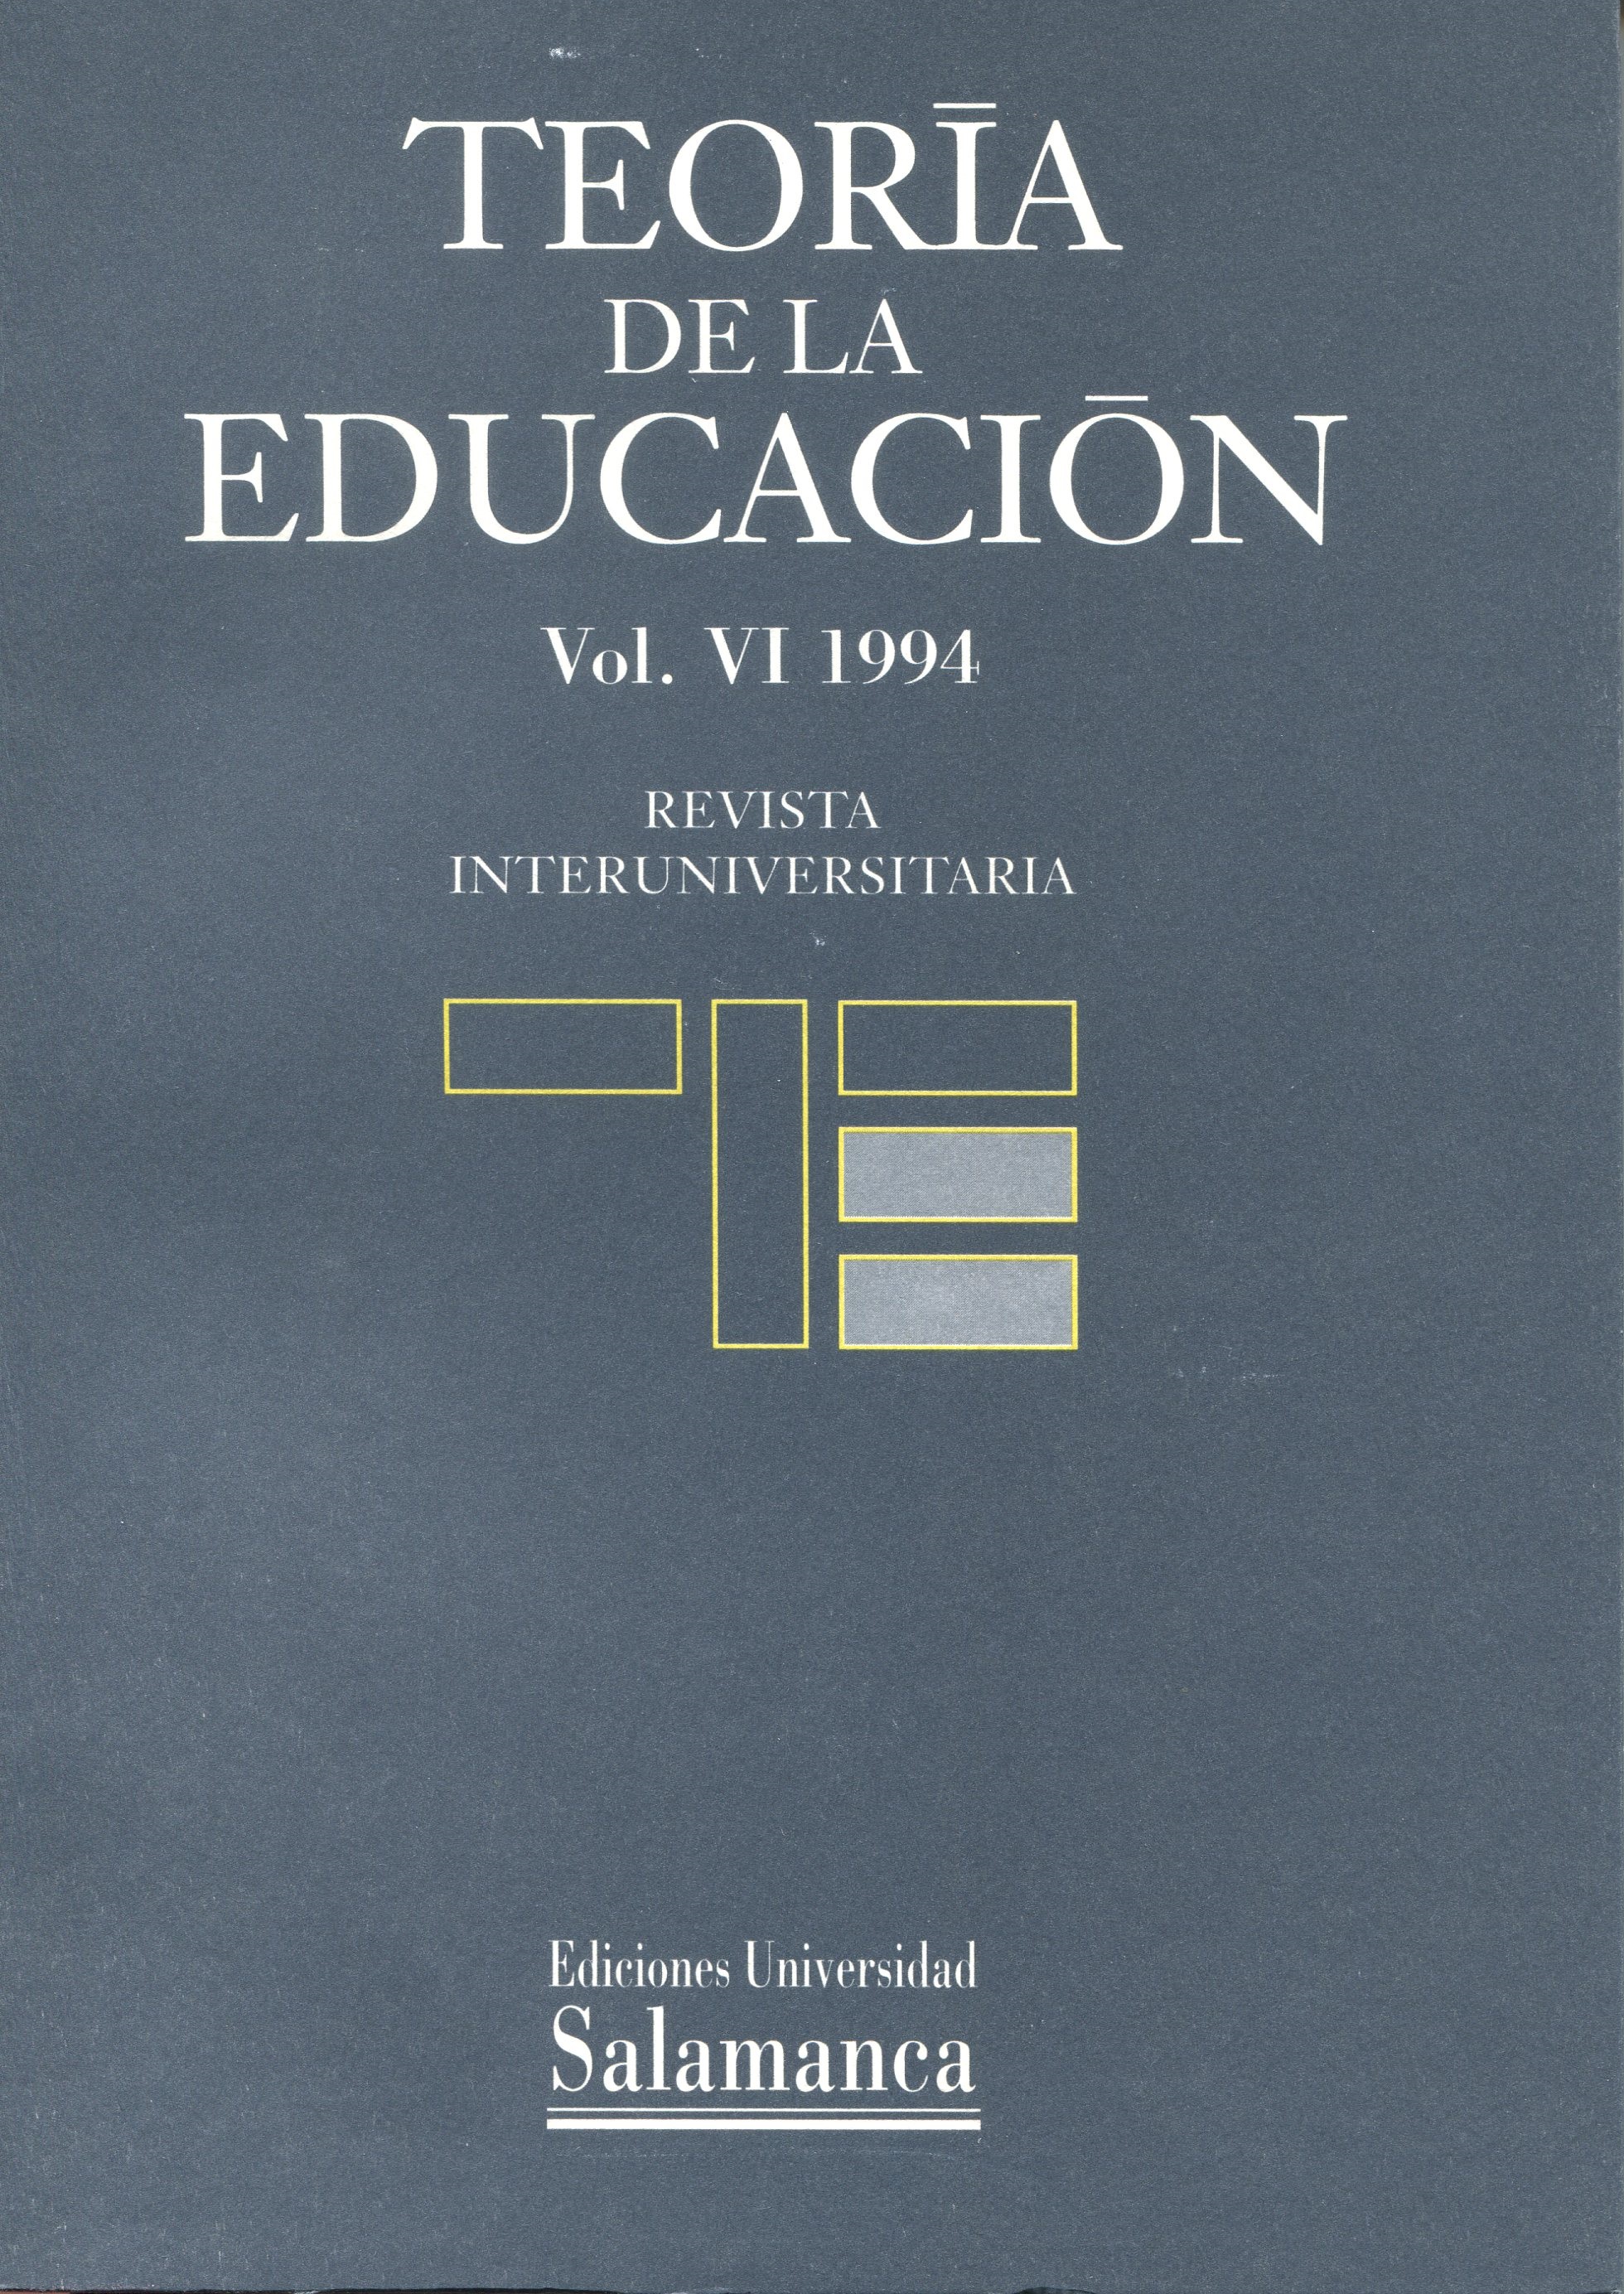                         Ver Vol. 6 (1994)
                    